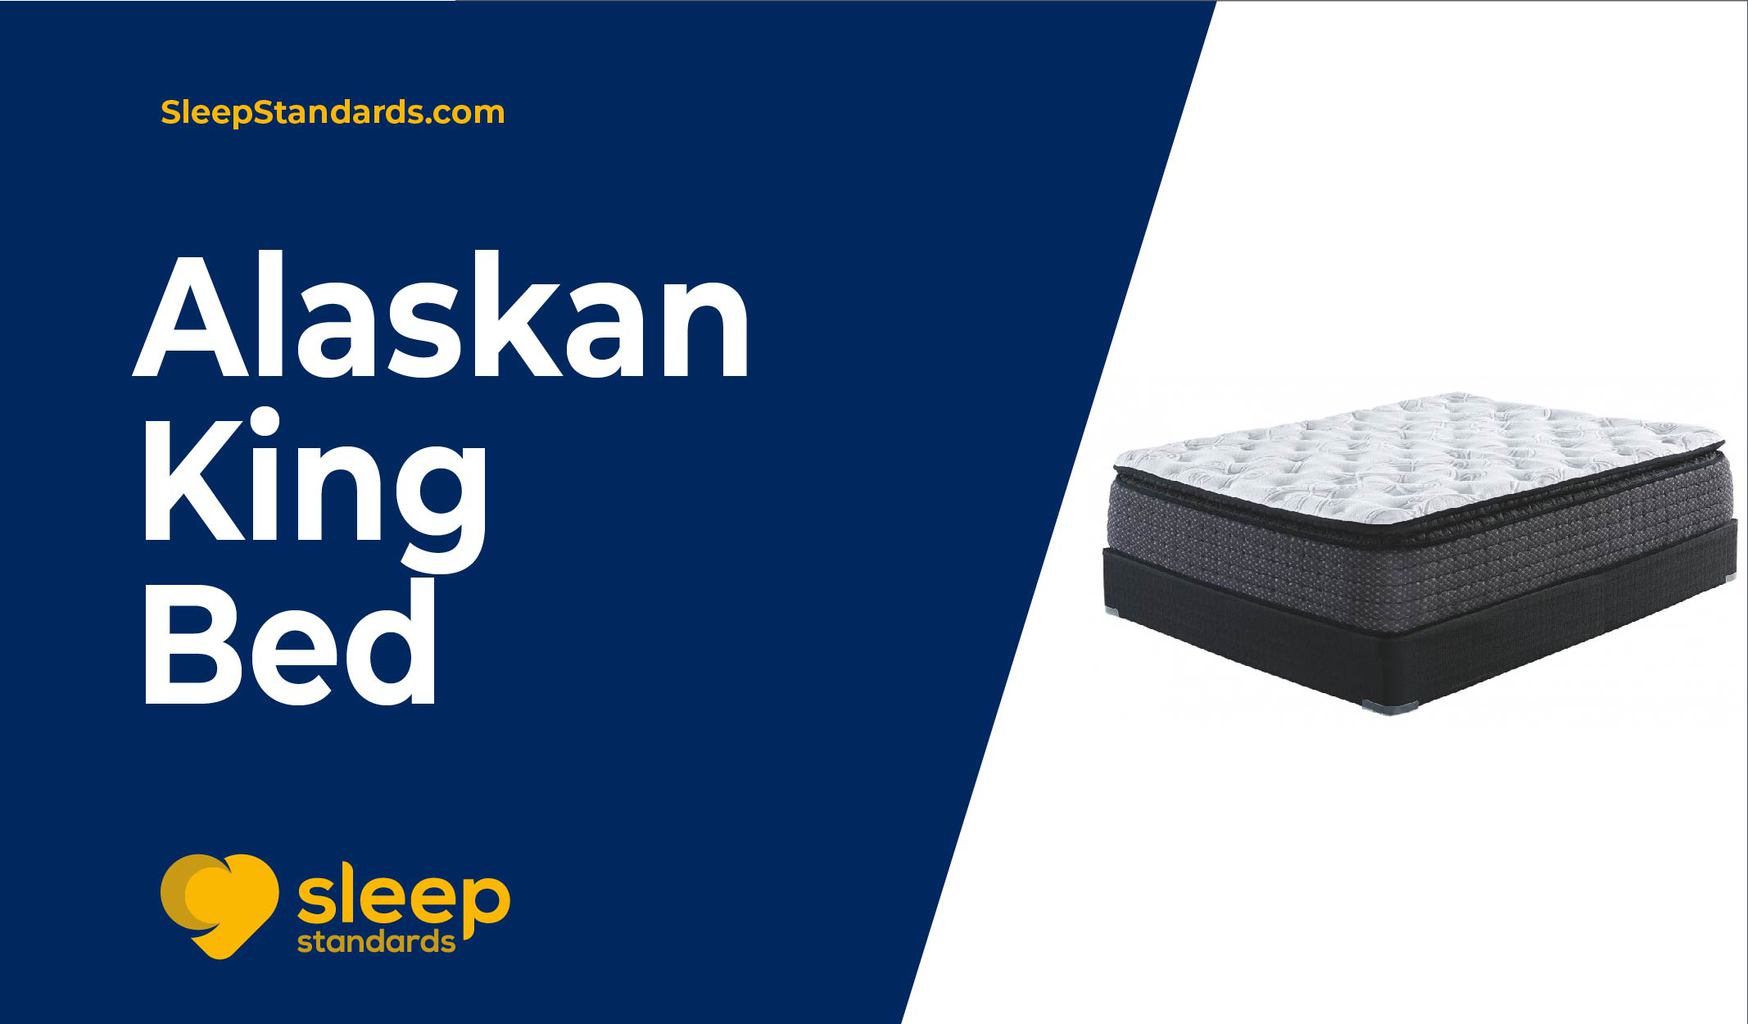 Alaskan King Bed Buyer's Guide